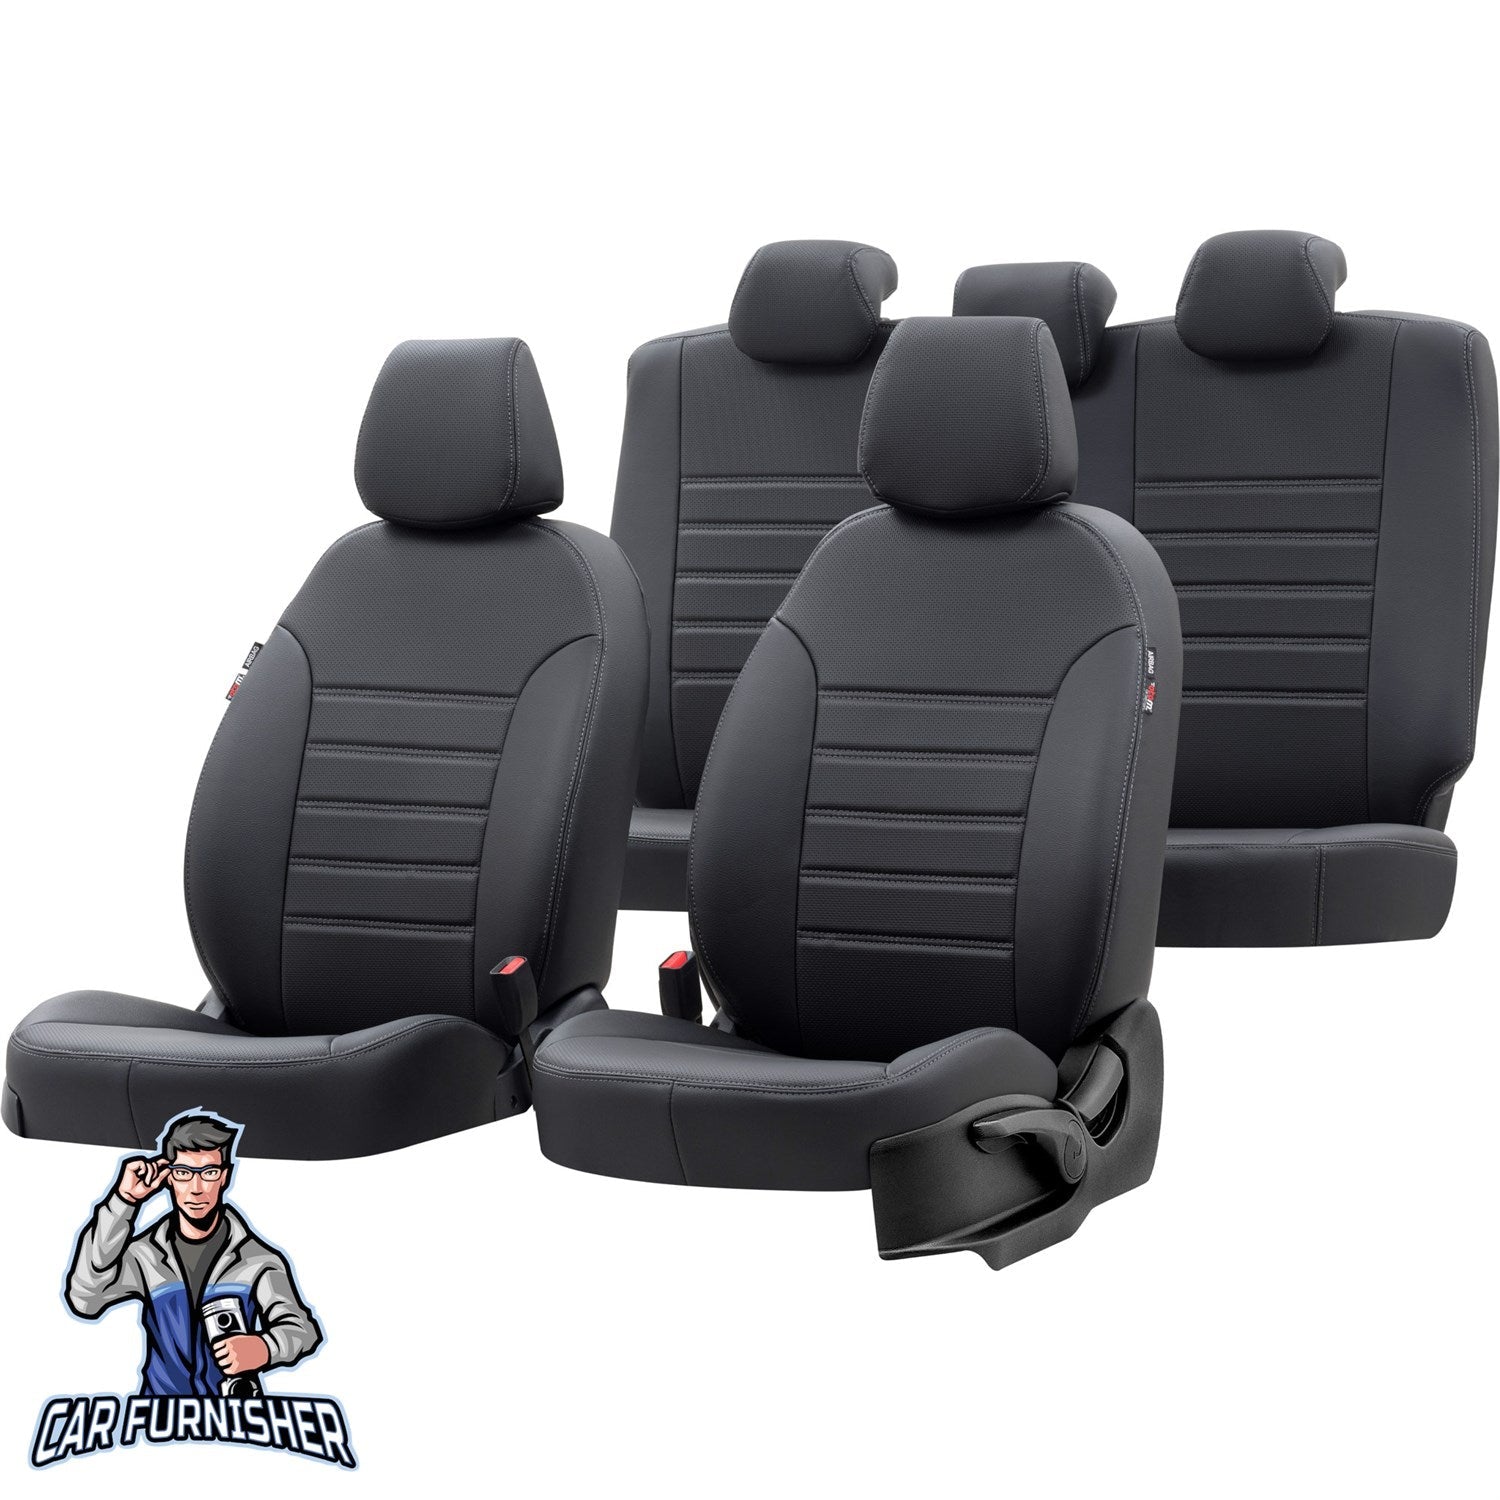 Volkswagen Transporter Seat Cover New York Leather Design Black Leather